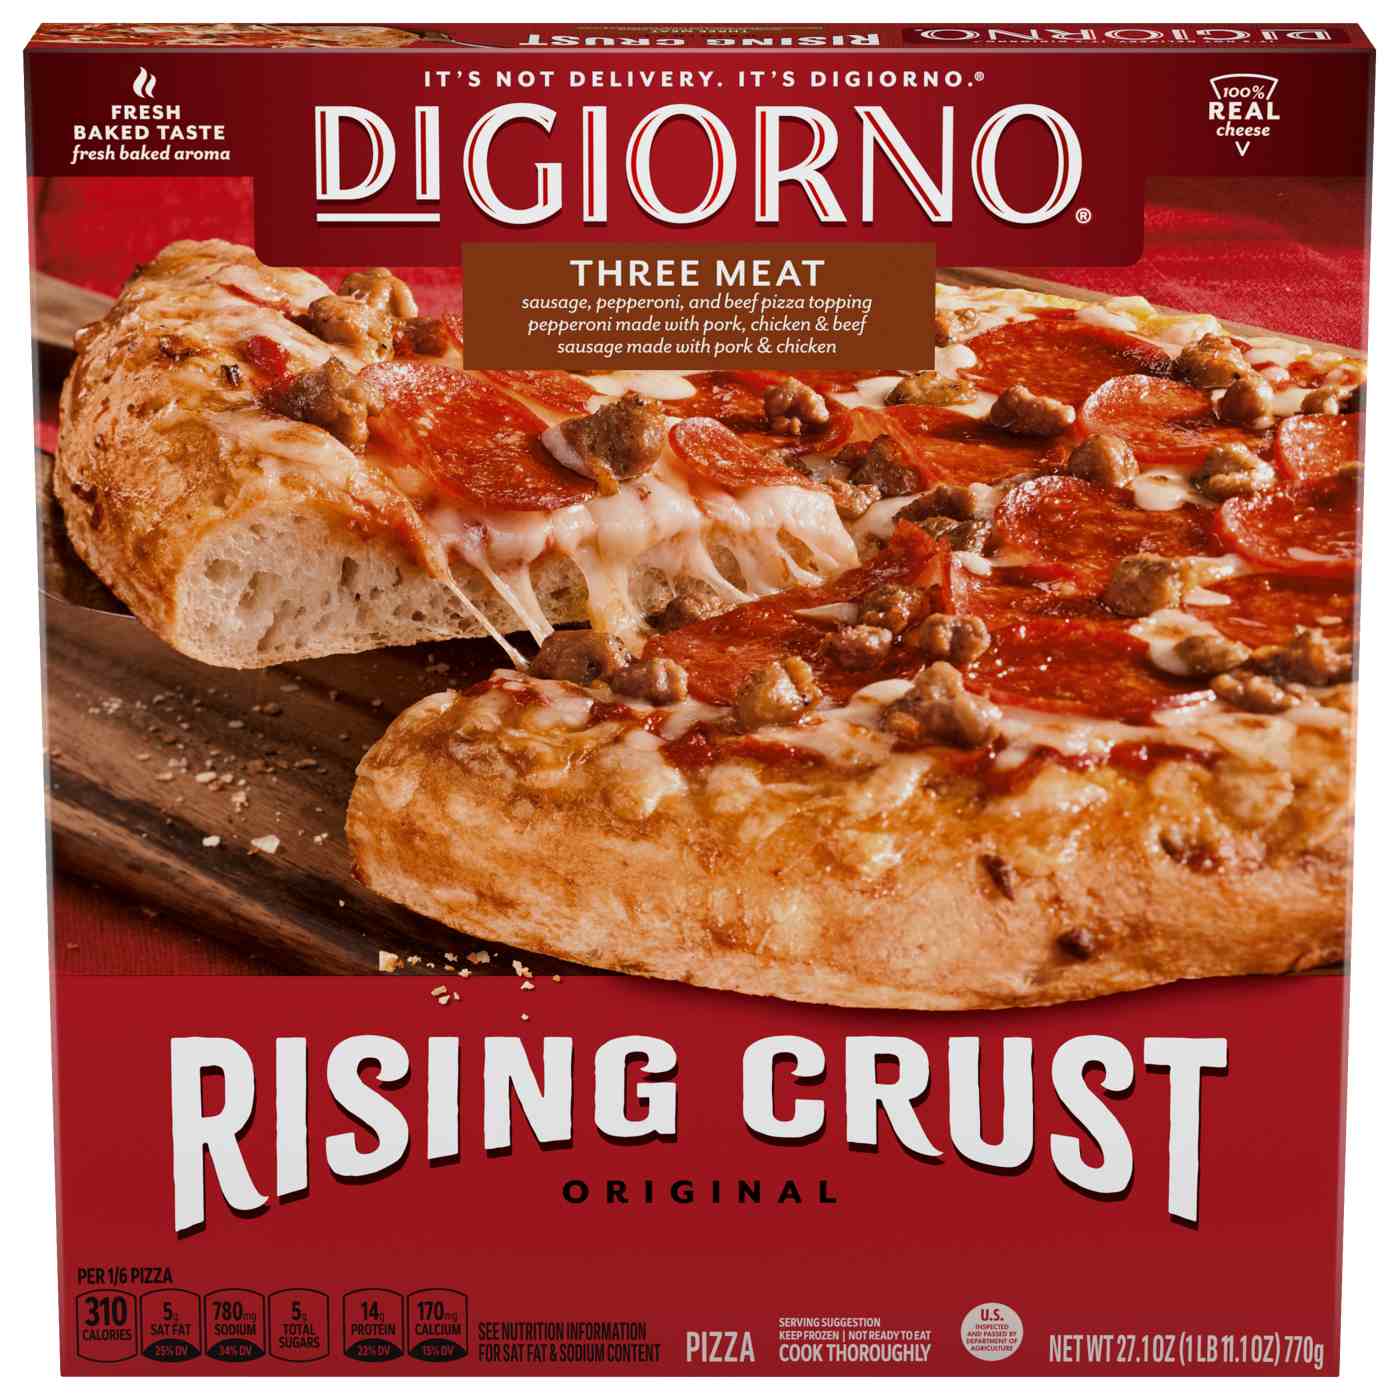 DiGiorno Rising Crust Frozen Pizza - Three Meat; image 1 of 5